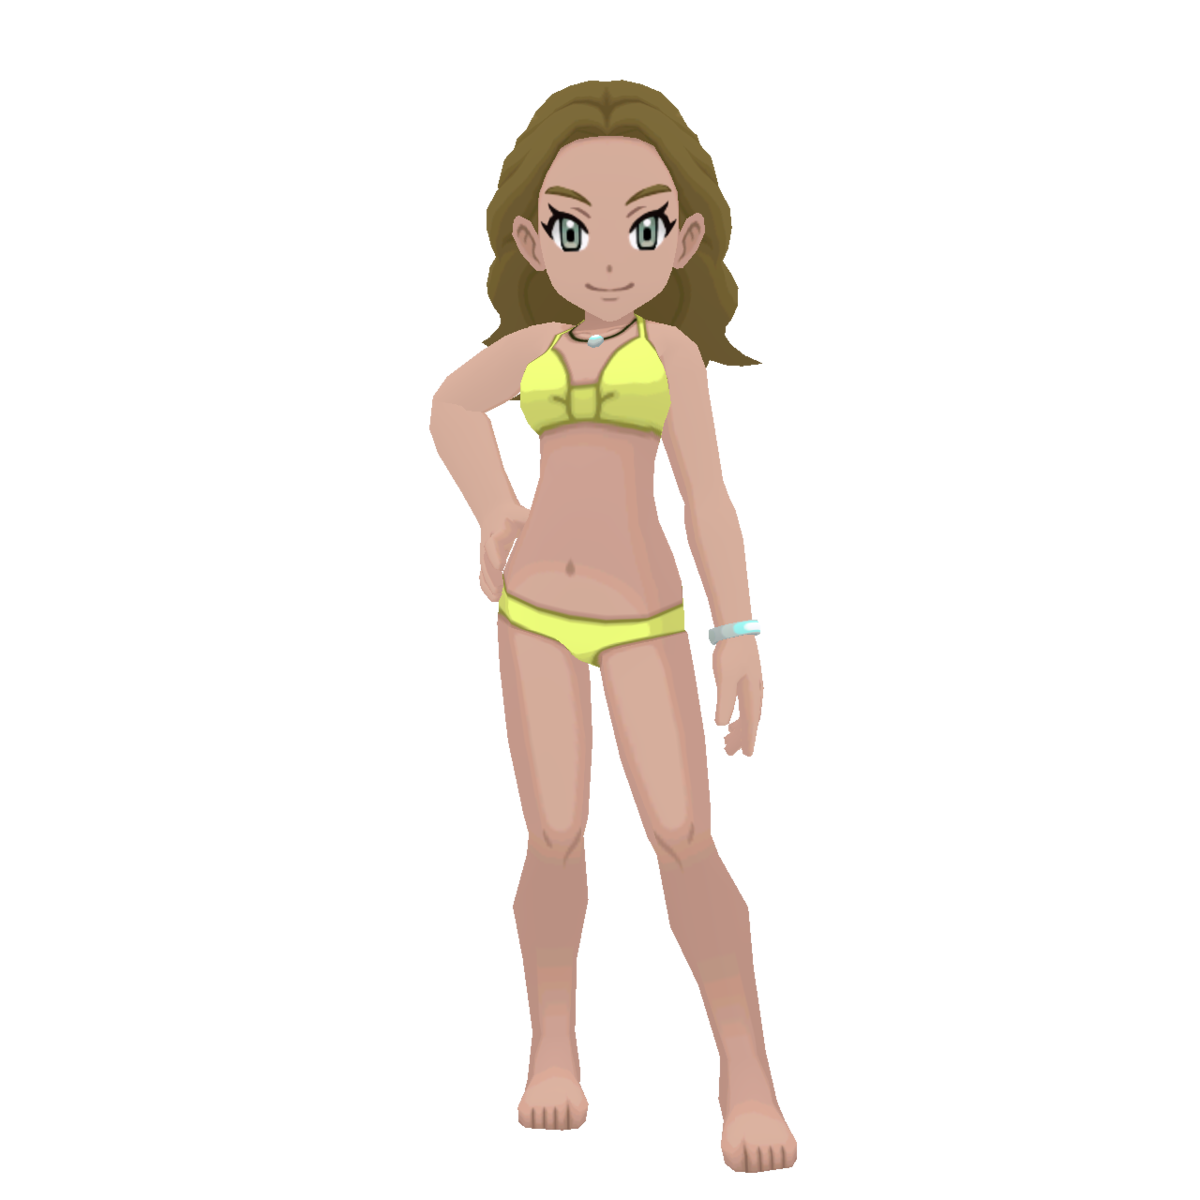 Swimmer Girls Trainer Class Bulbapedia The Community Driven Pokémon Encyclopedia